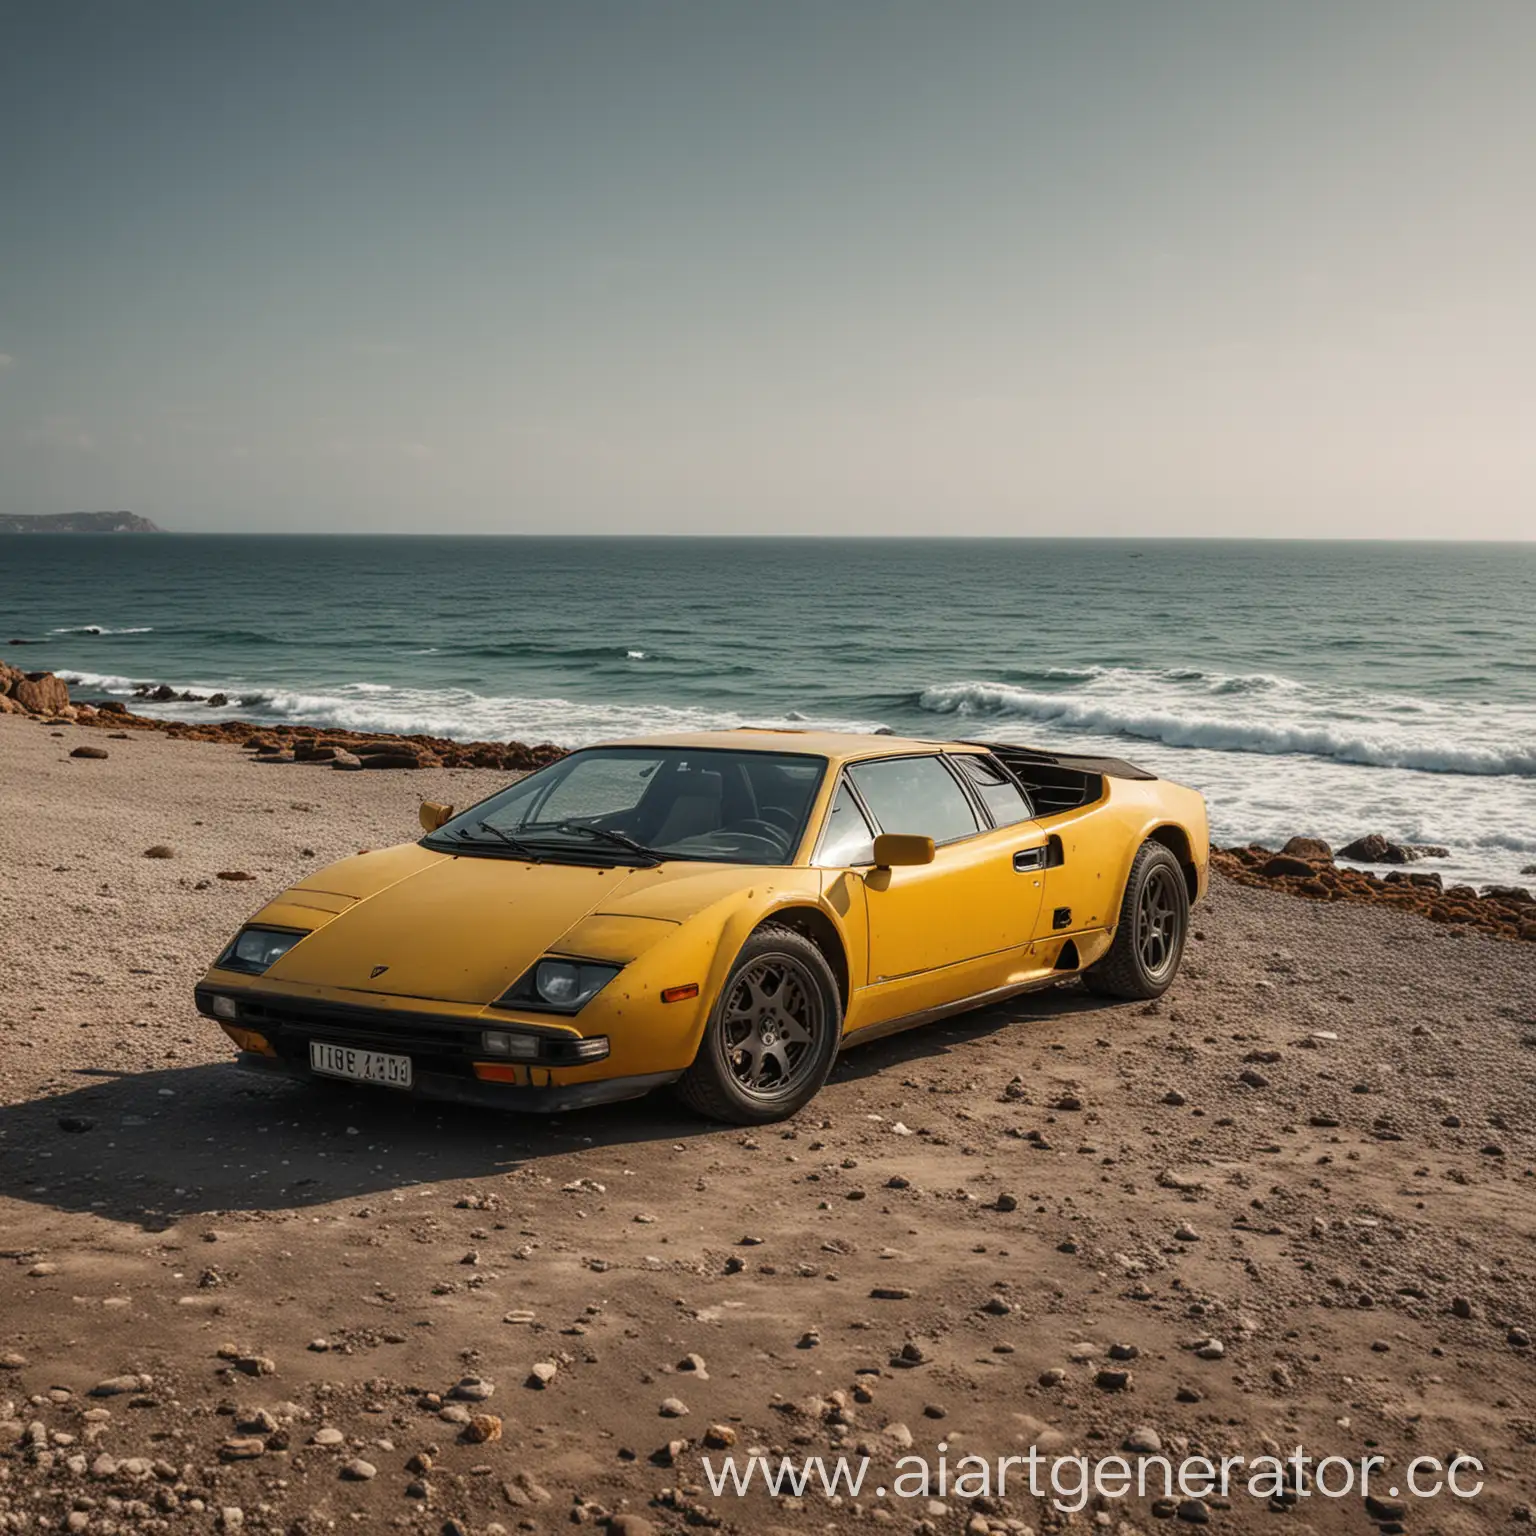 Vintage-Lamborghini-Parked-Alongside-Tranquil-Seaside